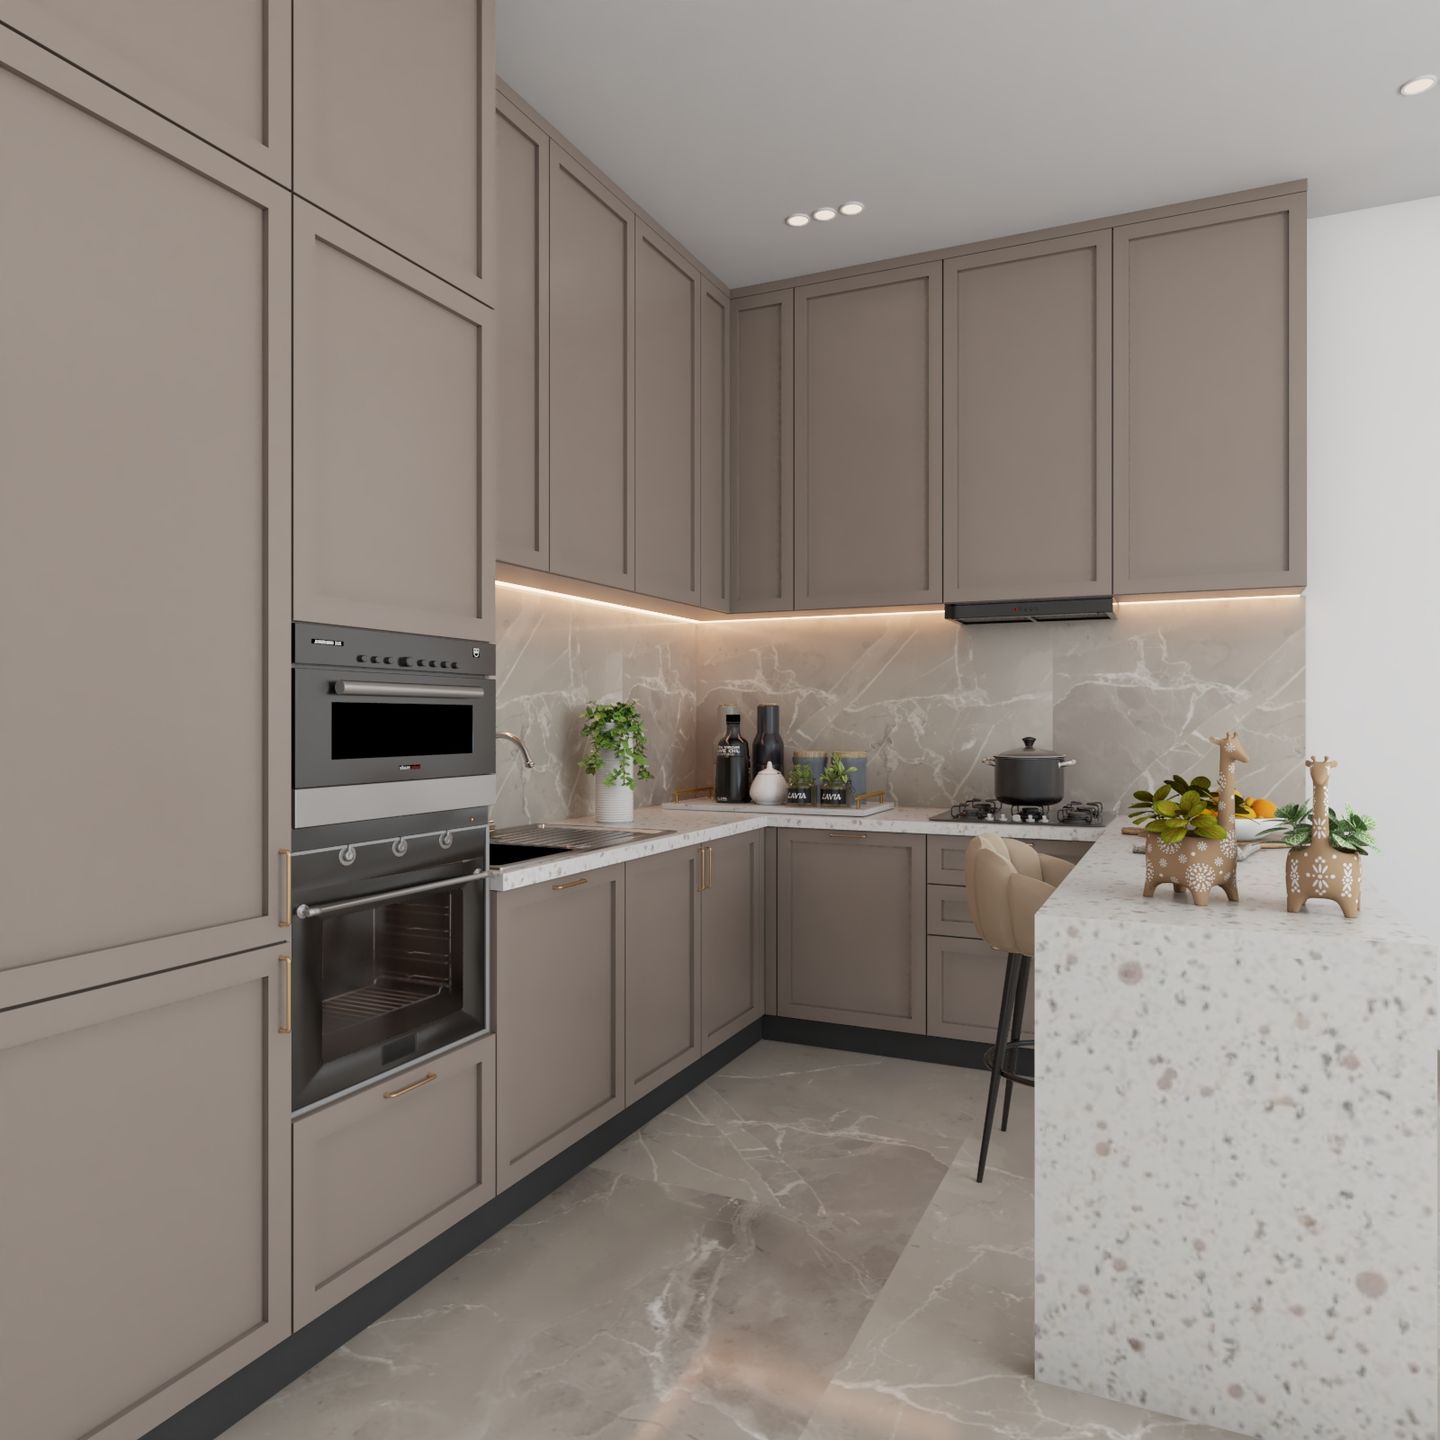 Beige Peninsula Kitchen Design With Tall Appliances - Livspace